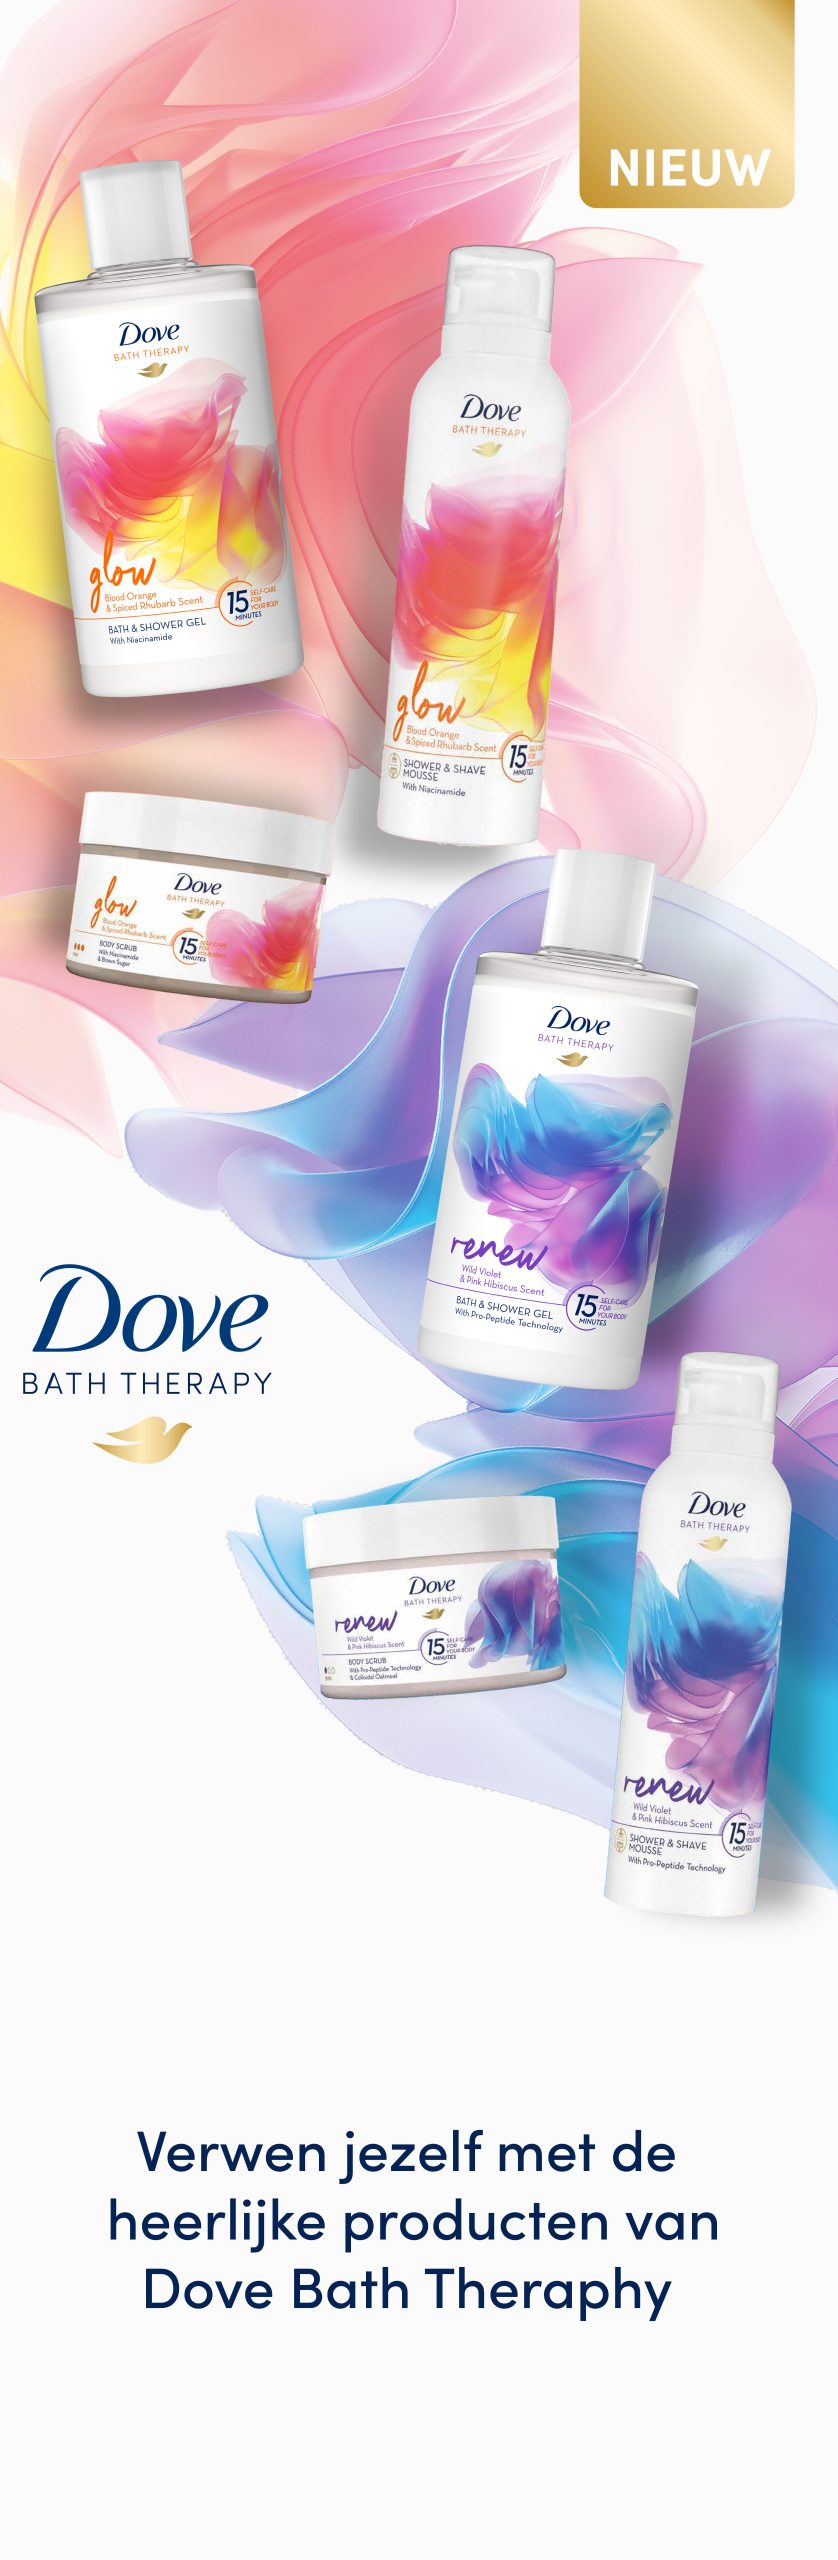 _Dove-Bath-Therapy-Etos-TOTEM-v1-2